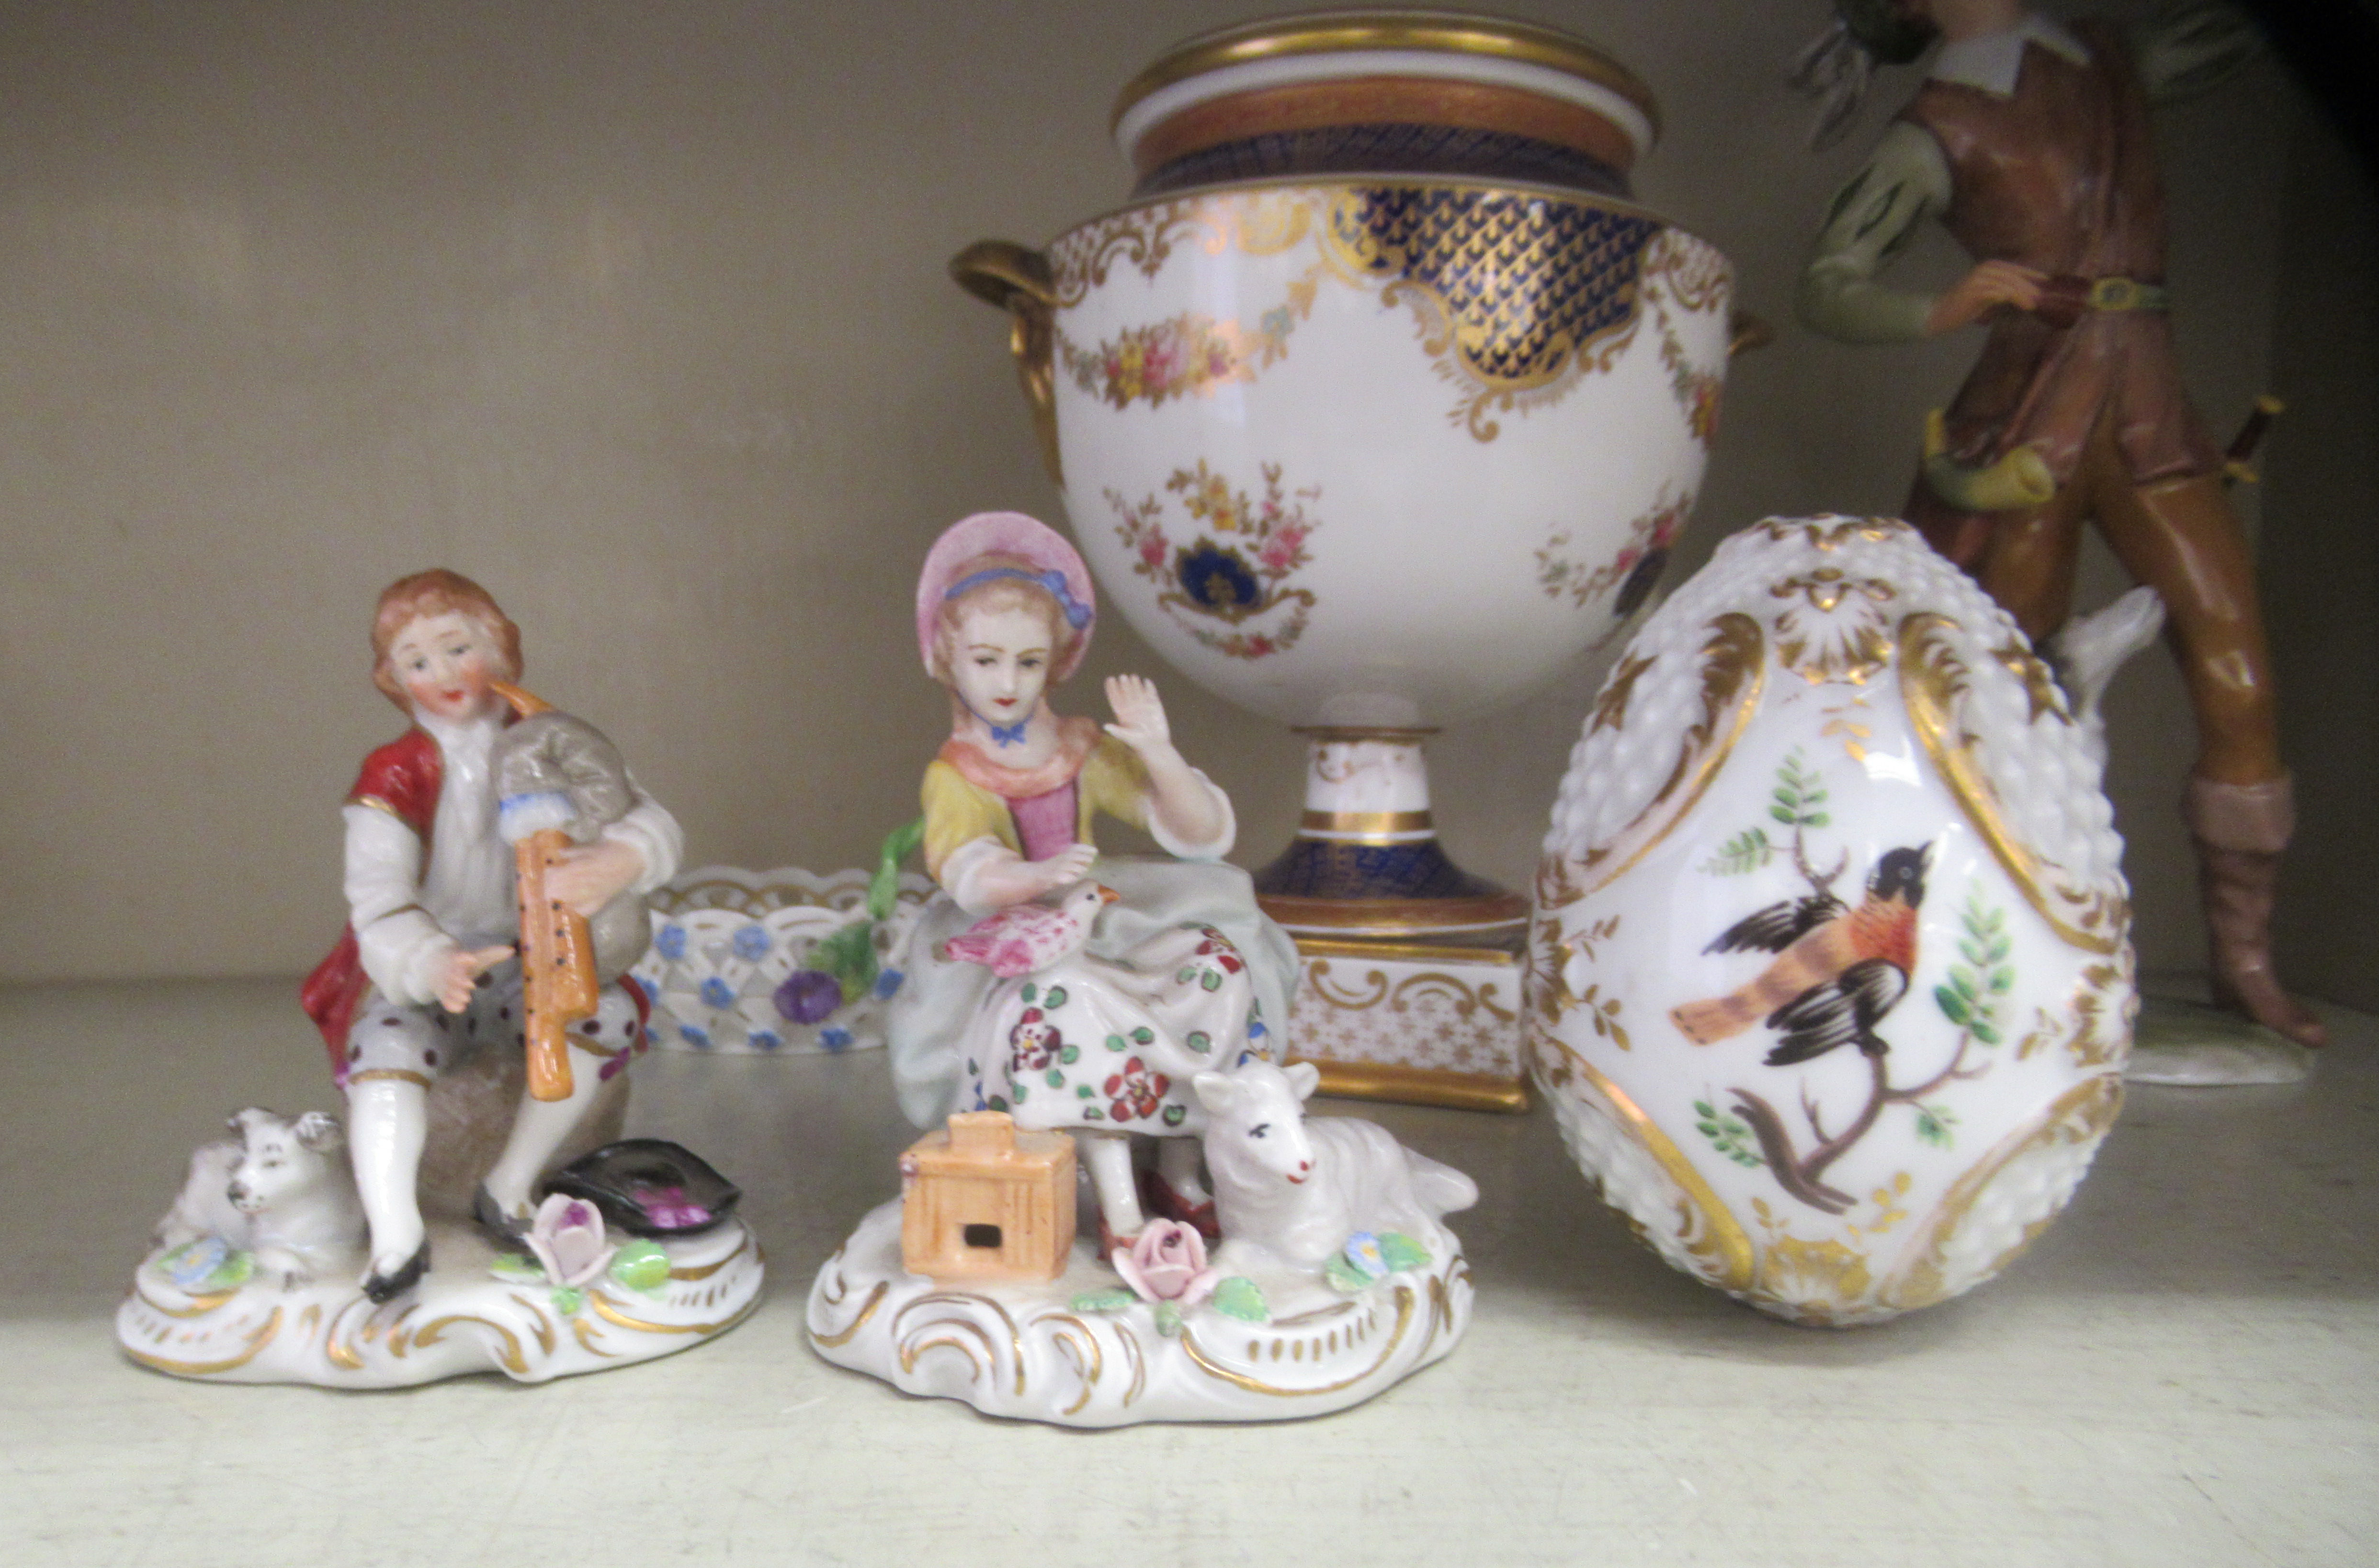 Decorative ceramics: to include a Kaiser porcelain figure, a hunter  10"h - Image 6 of 9